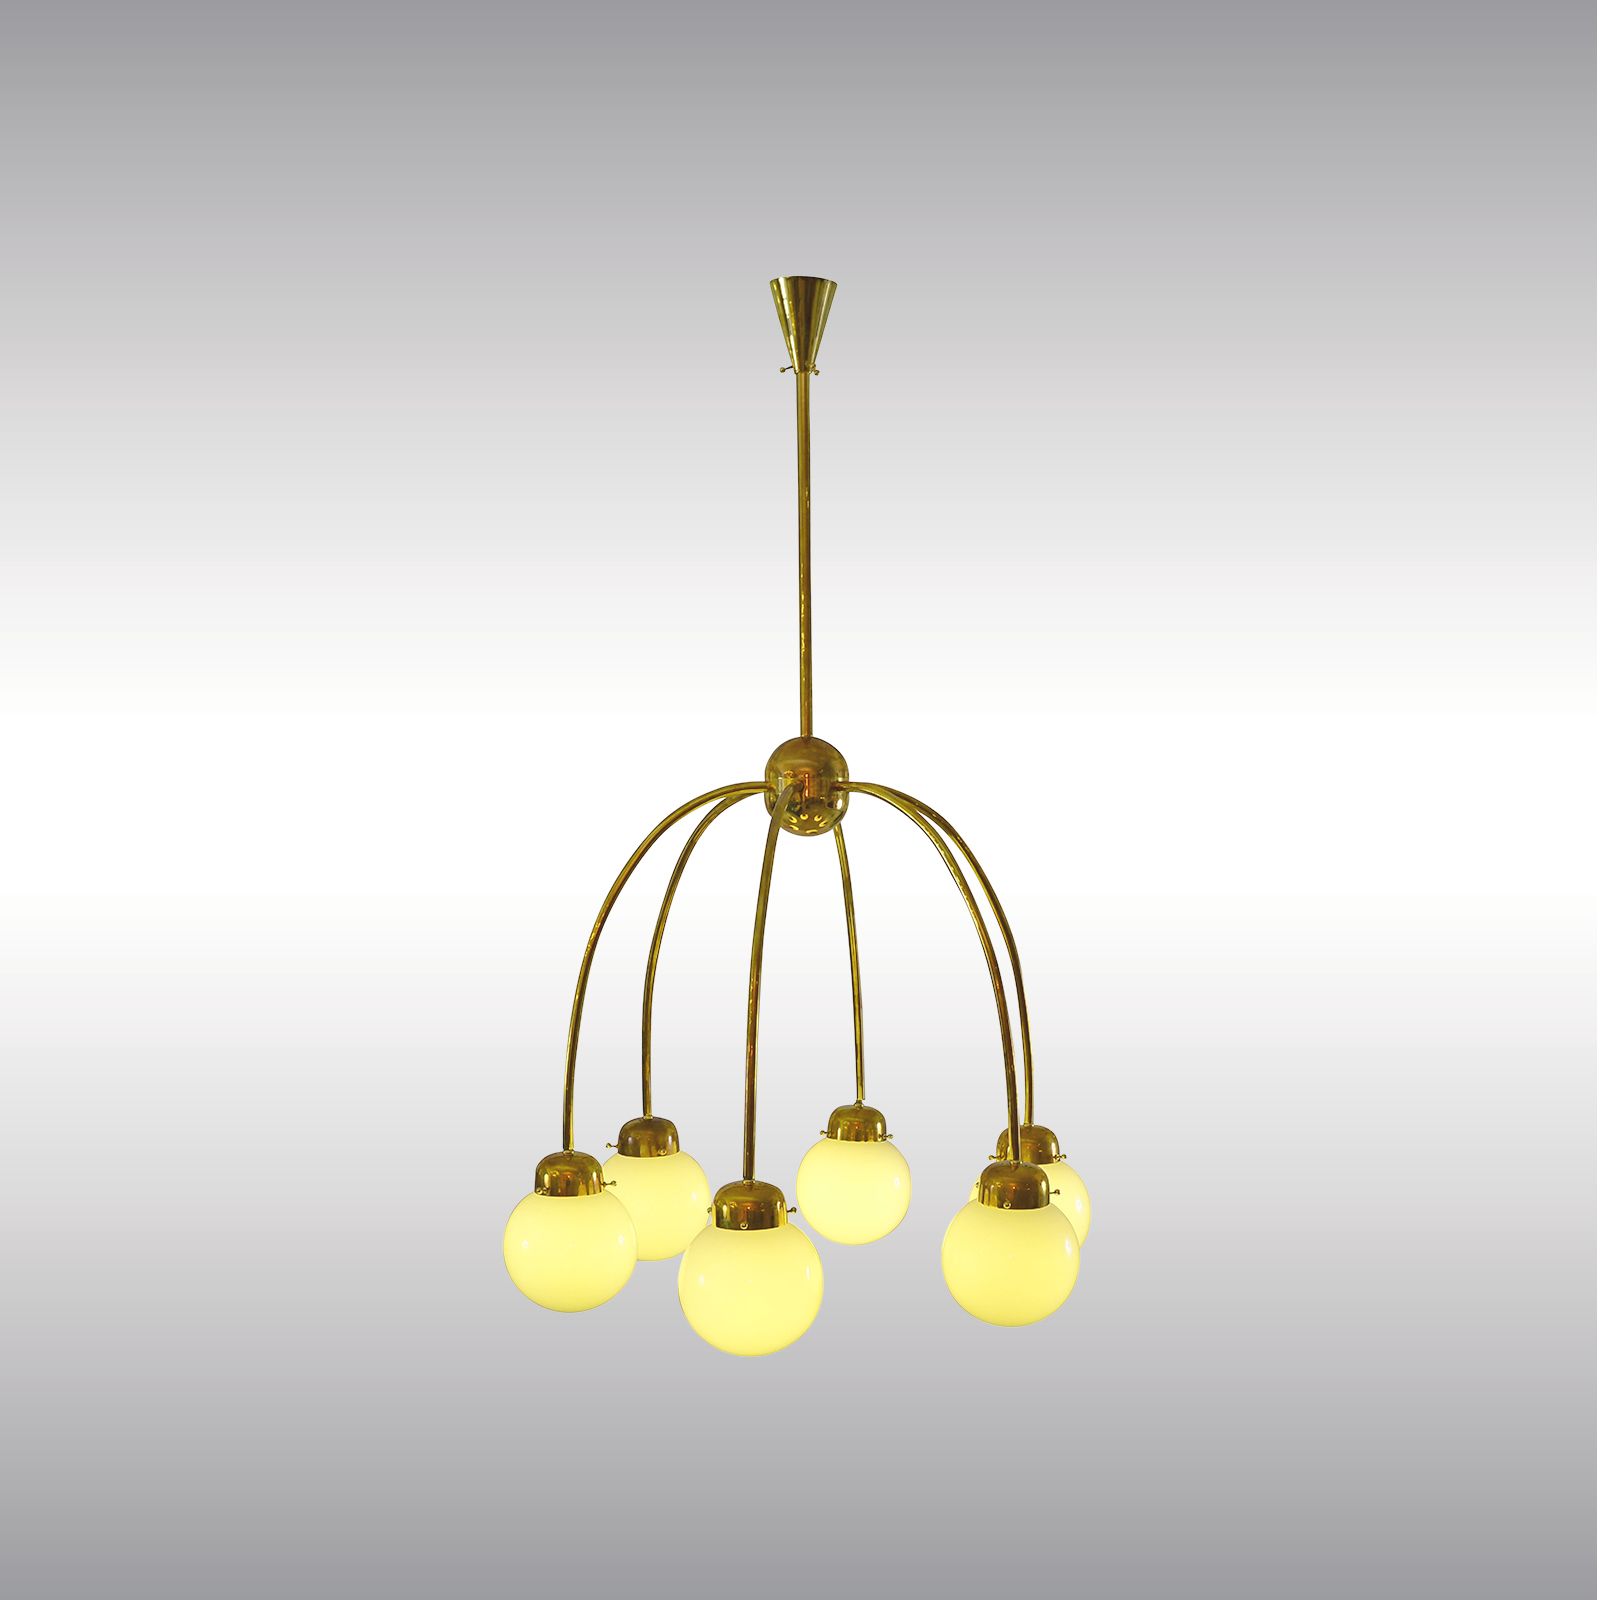 WOKA LAMPS VIENNA - OrderNr.: 21605|6 - arm chandelier, M I pe40 - Design: Josef Hoffmann